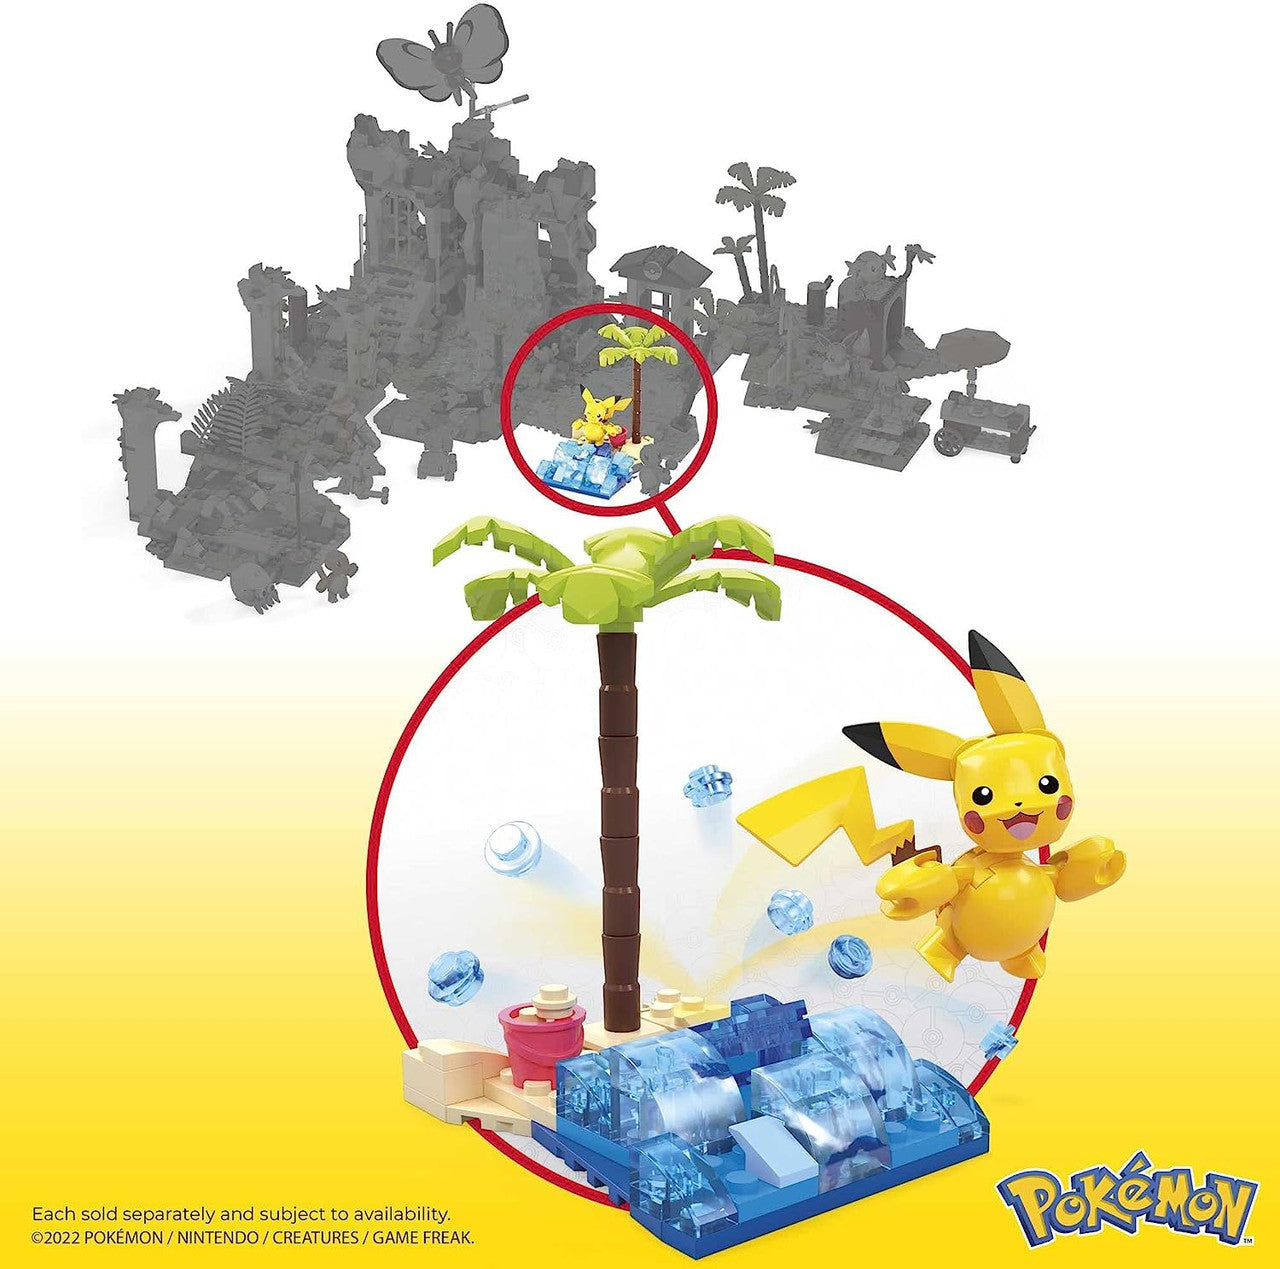 Pokemon Mega Construx: Adventure Builder - Pikachu's Beach Splash